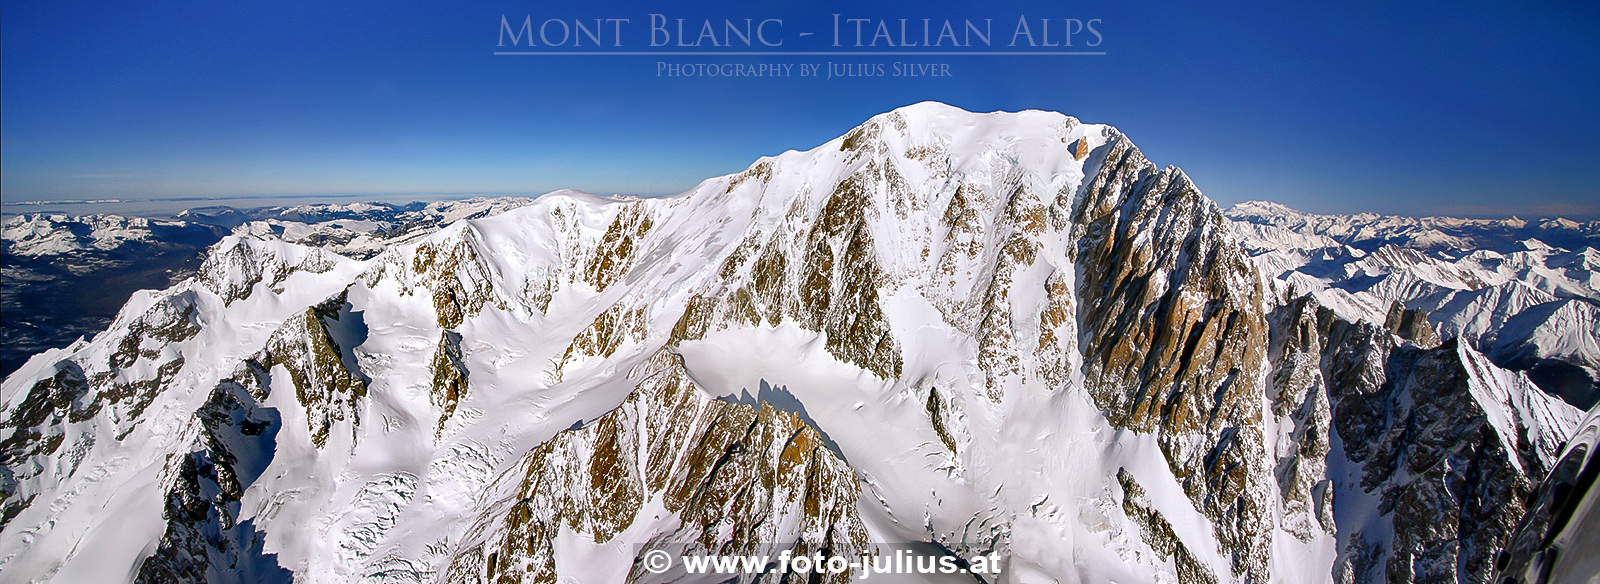 1029a_Mont_Blanc.jpg, 636kB